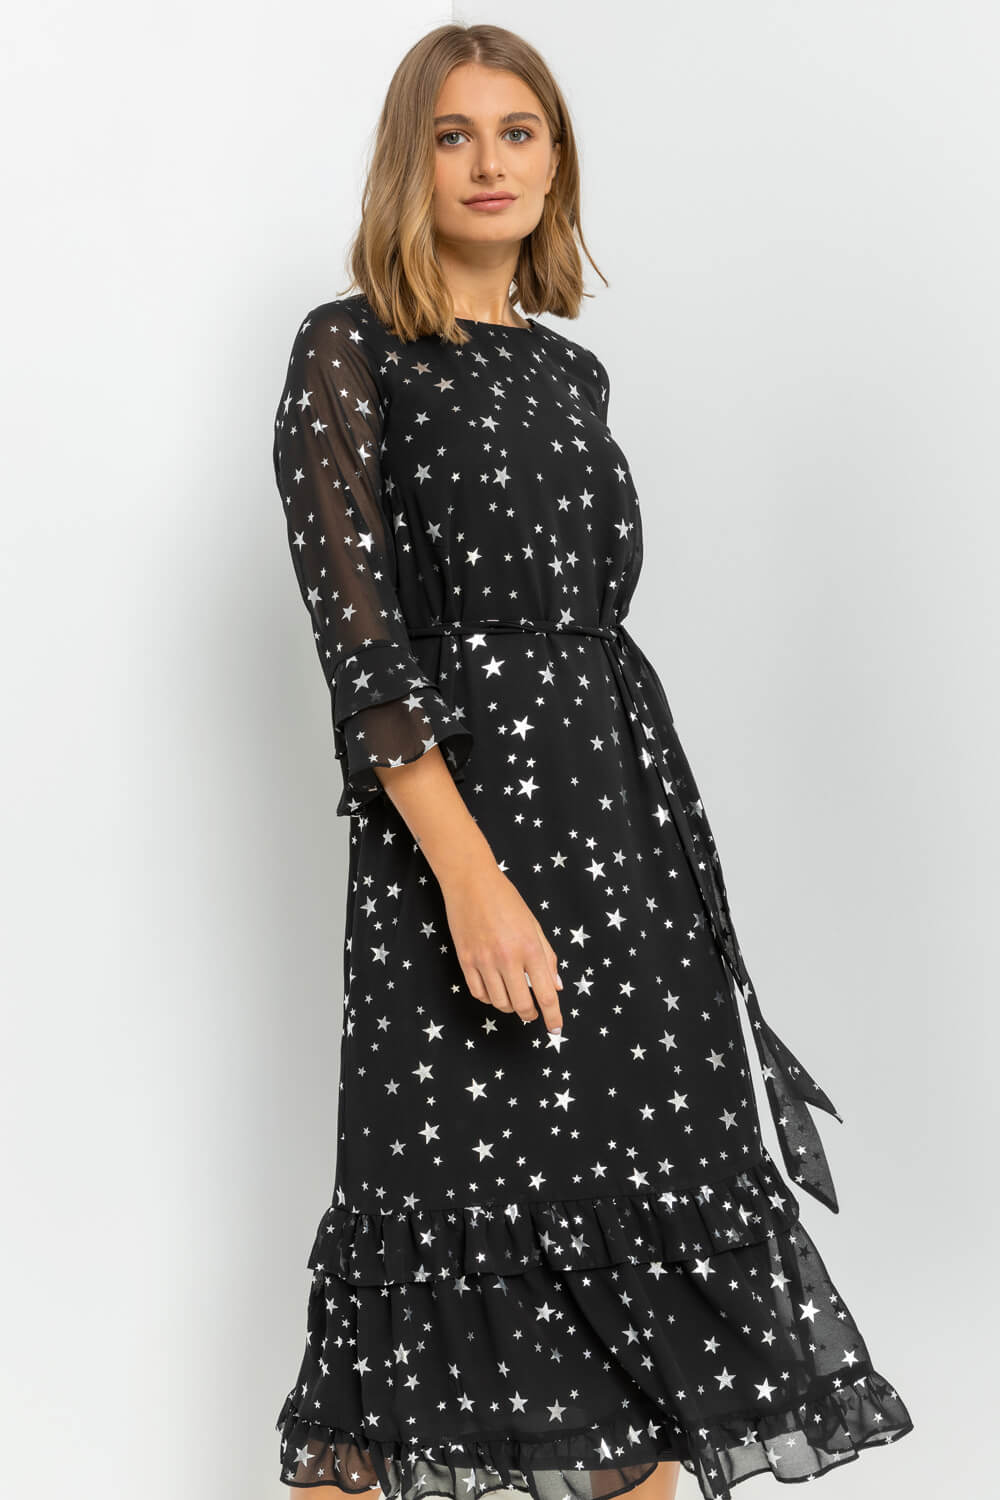 Black Star Foil Print Frill Dress, Image 3 of 5